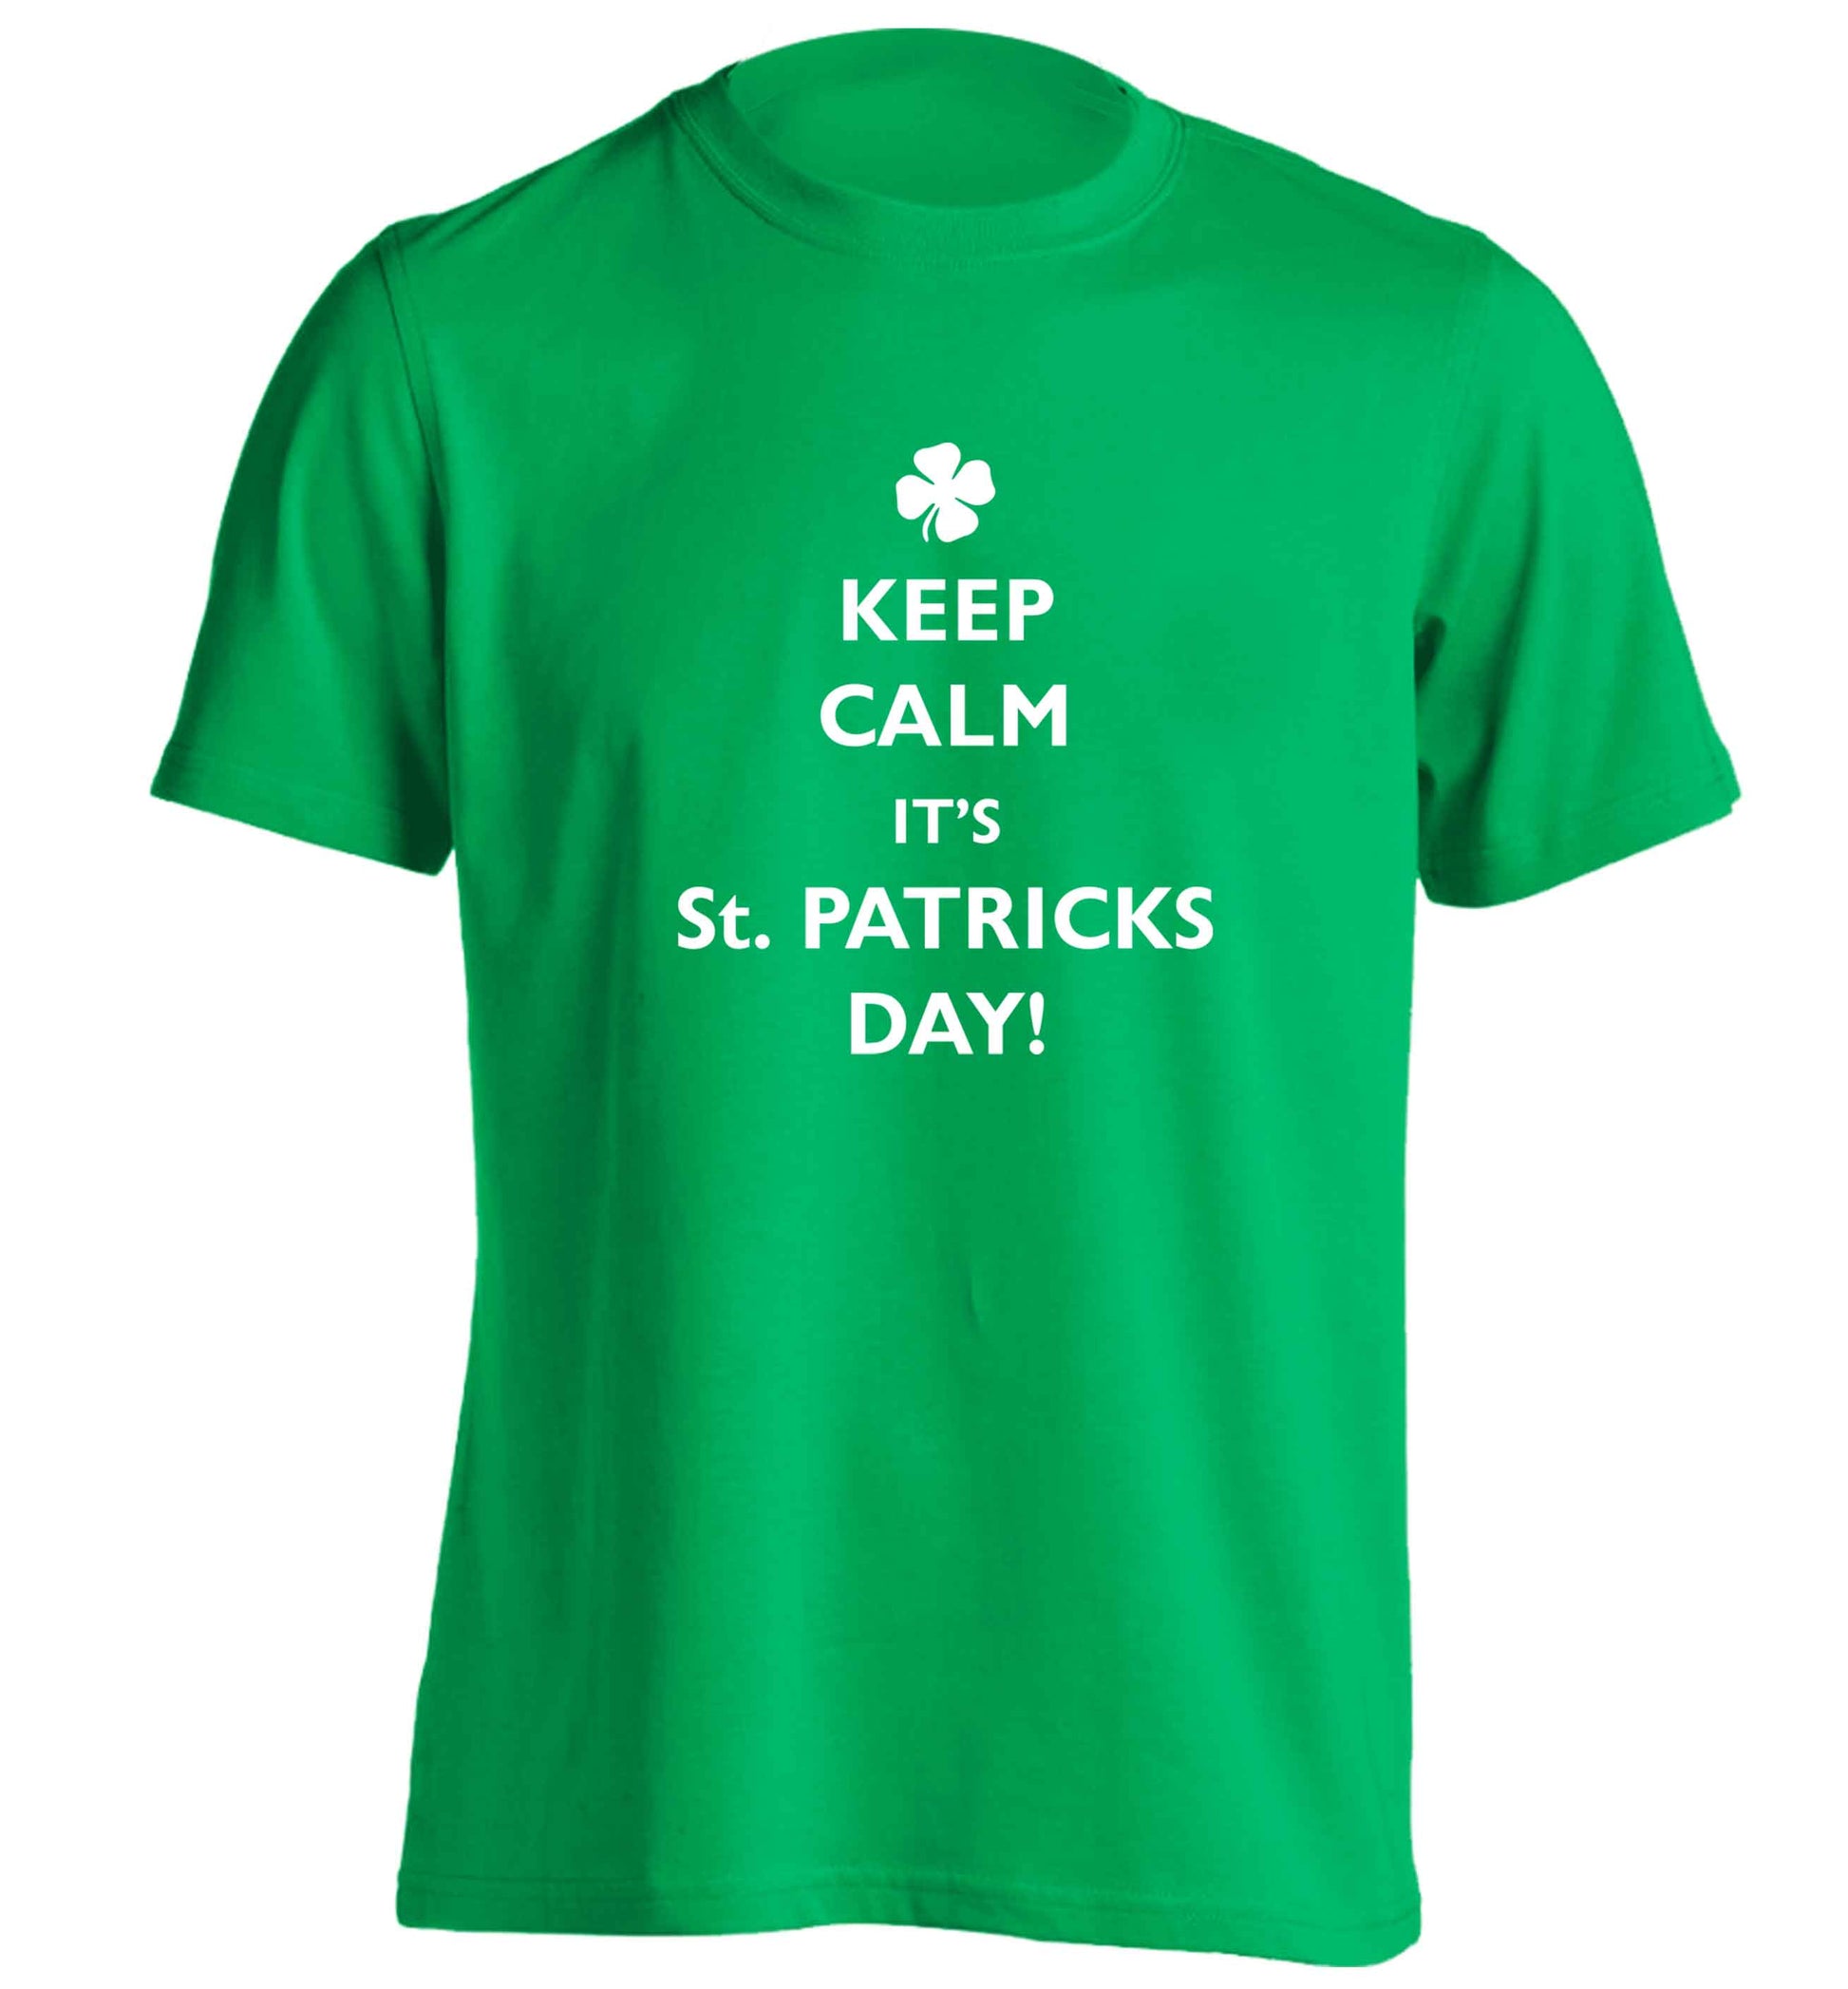 Keep calm it's St.Patricks day adults unisex green Tshirt 2XL